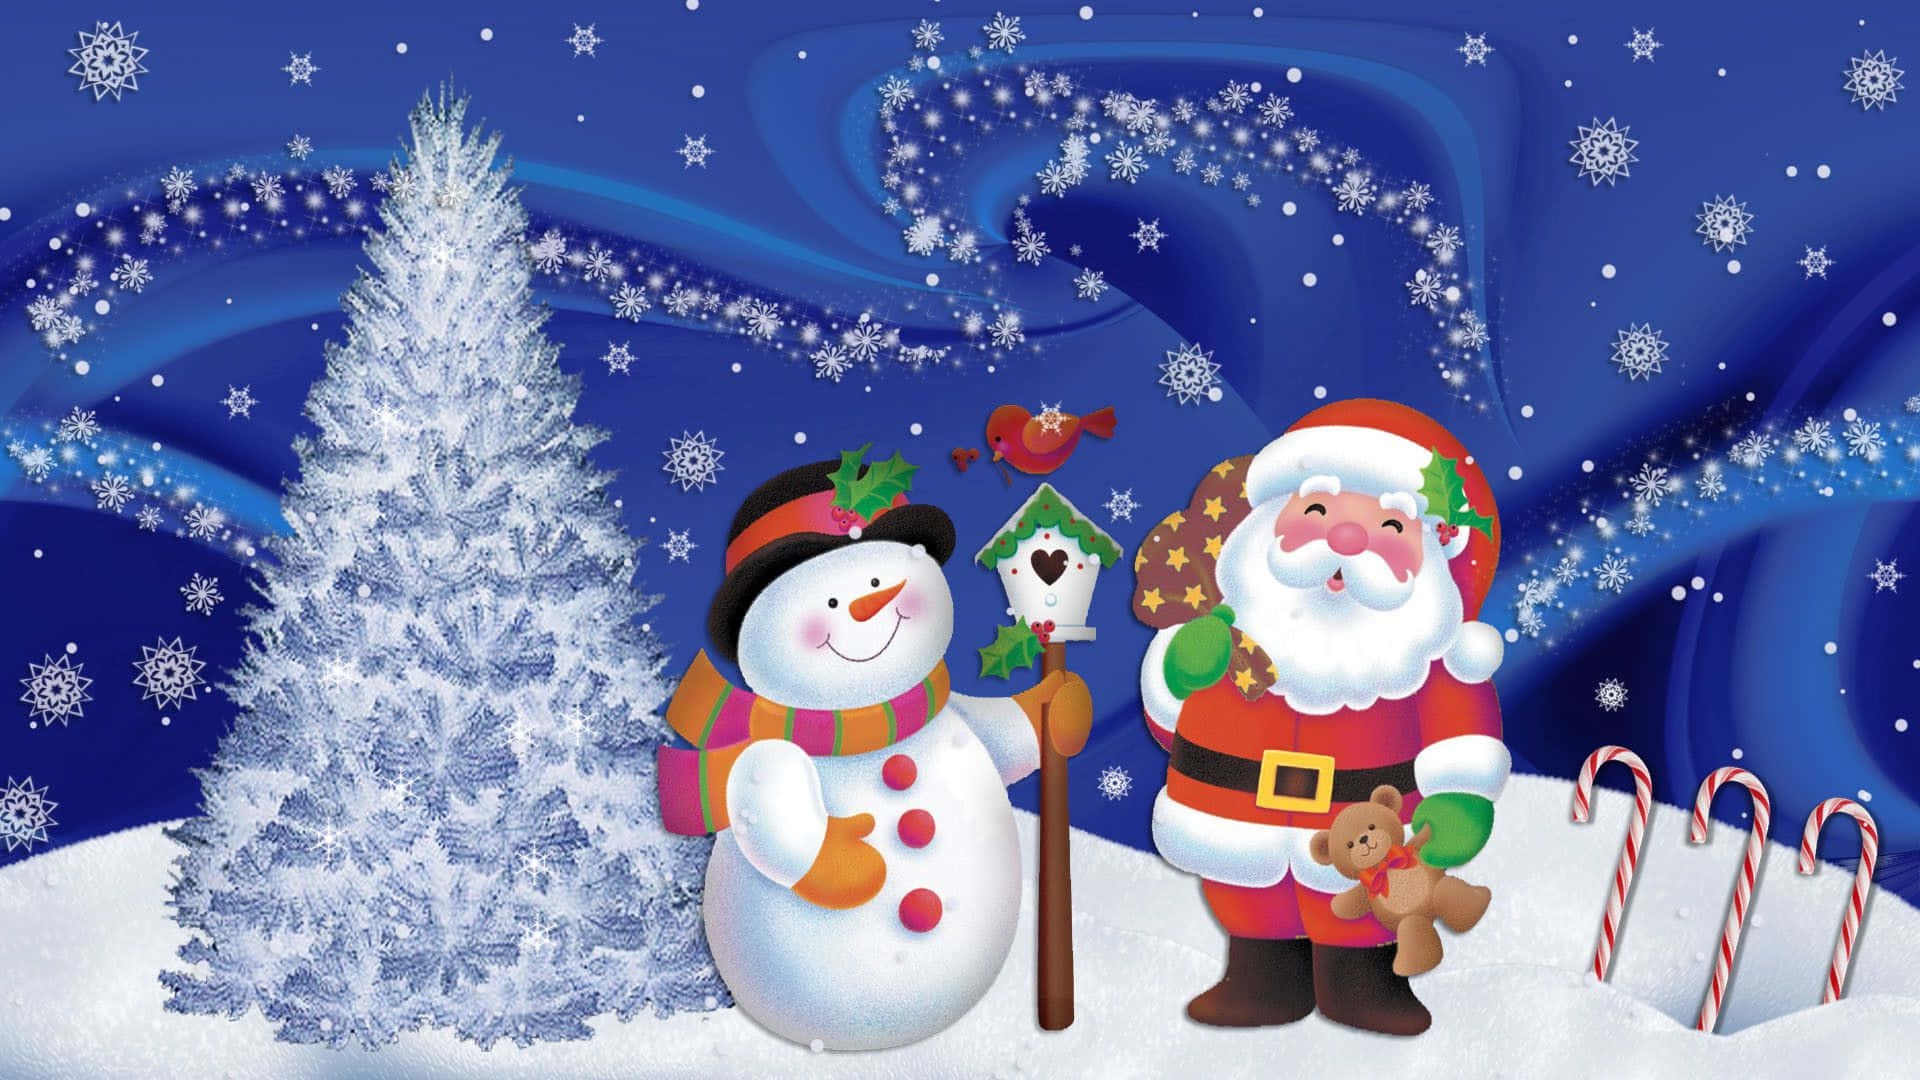 Santa Claus Has Come to Spread Holiday Cheer! Wallpaper